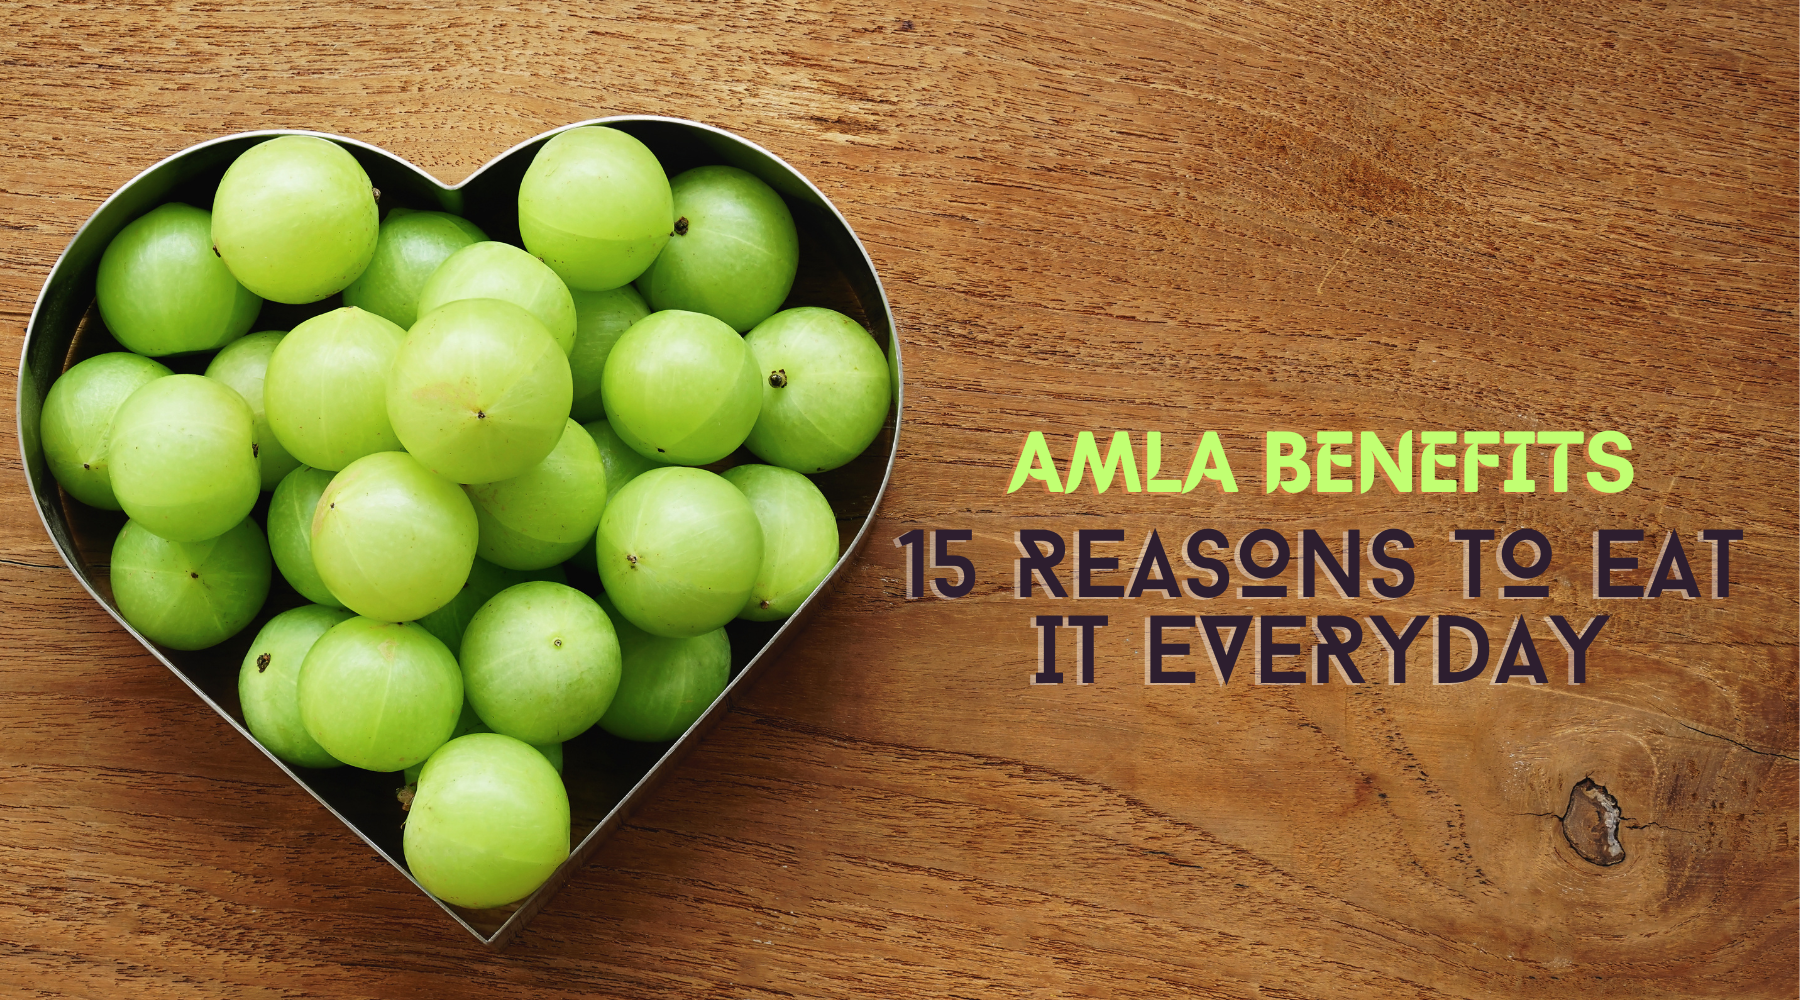 Amla Benefits - 15 Reasons to Eat it Everyday